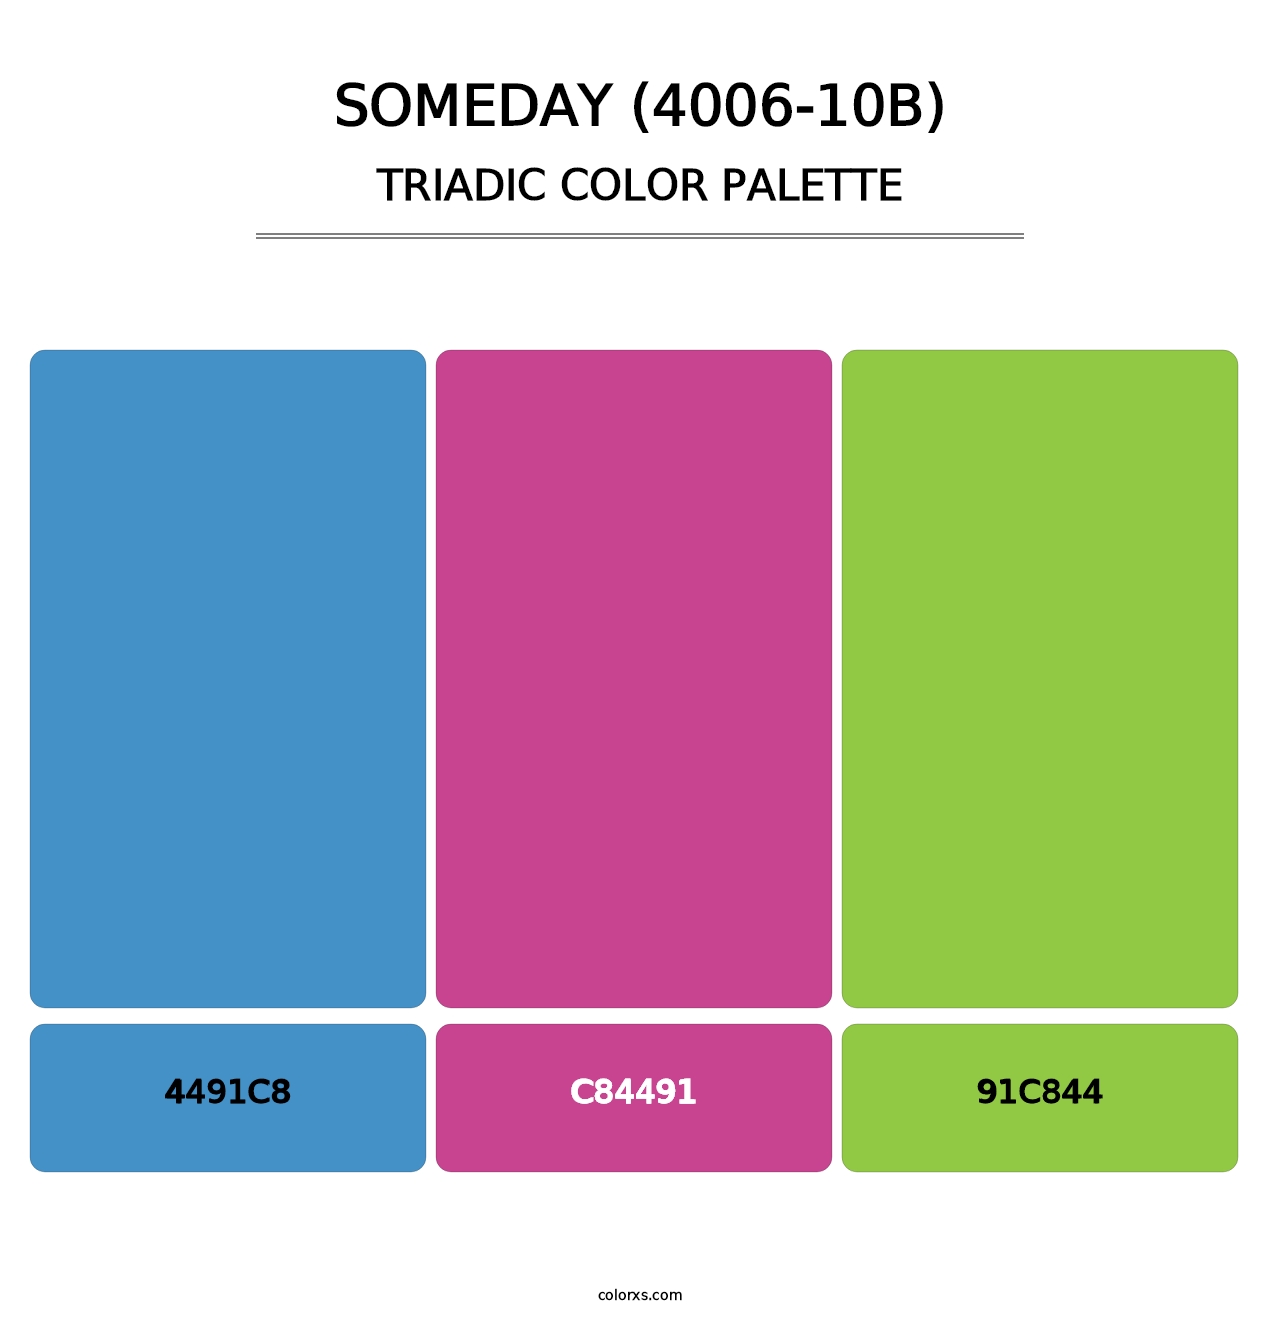 Someday (4006-10B) - Triadic Color Palette